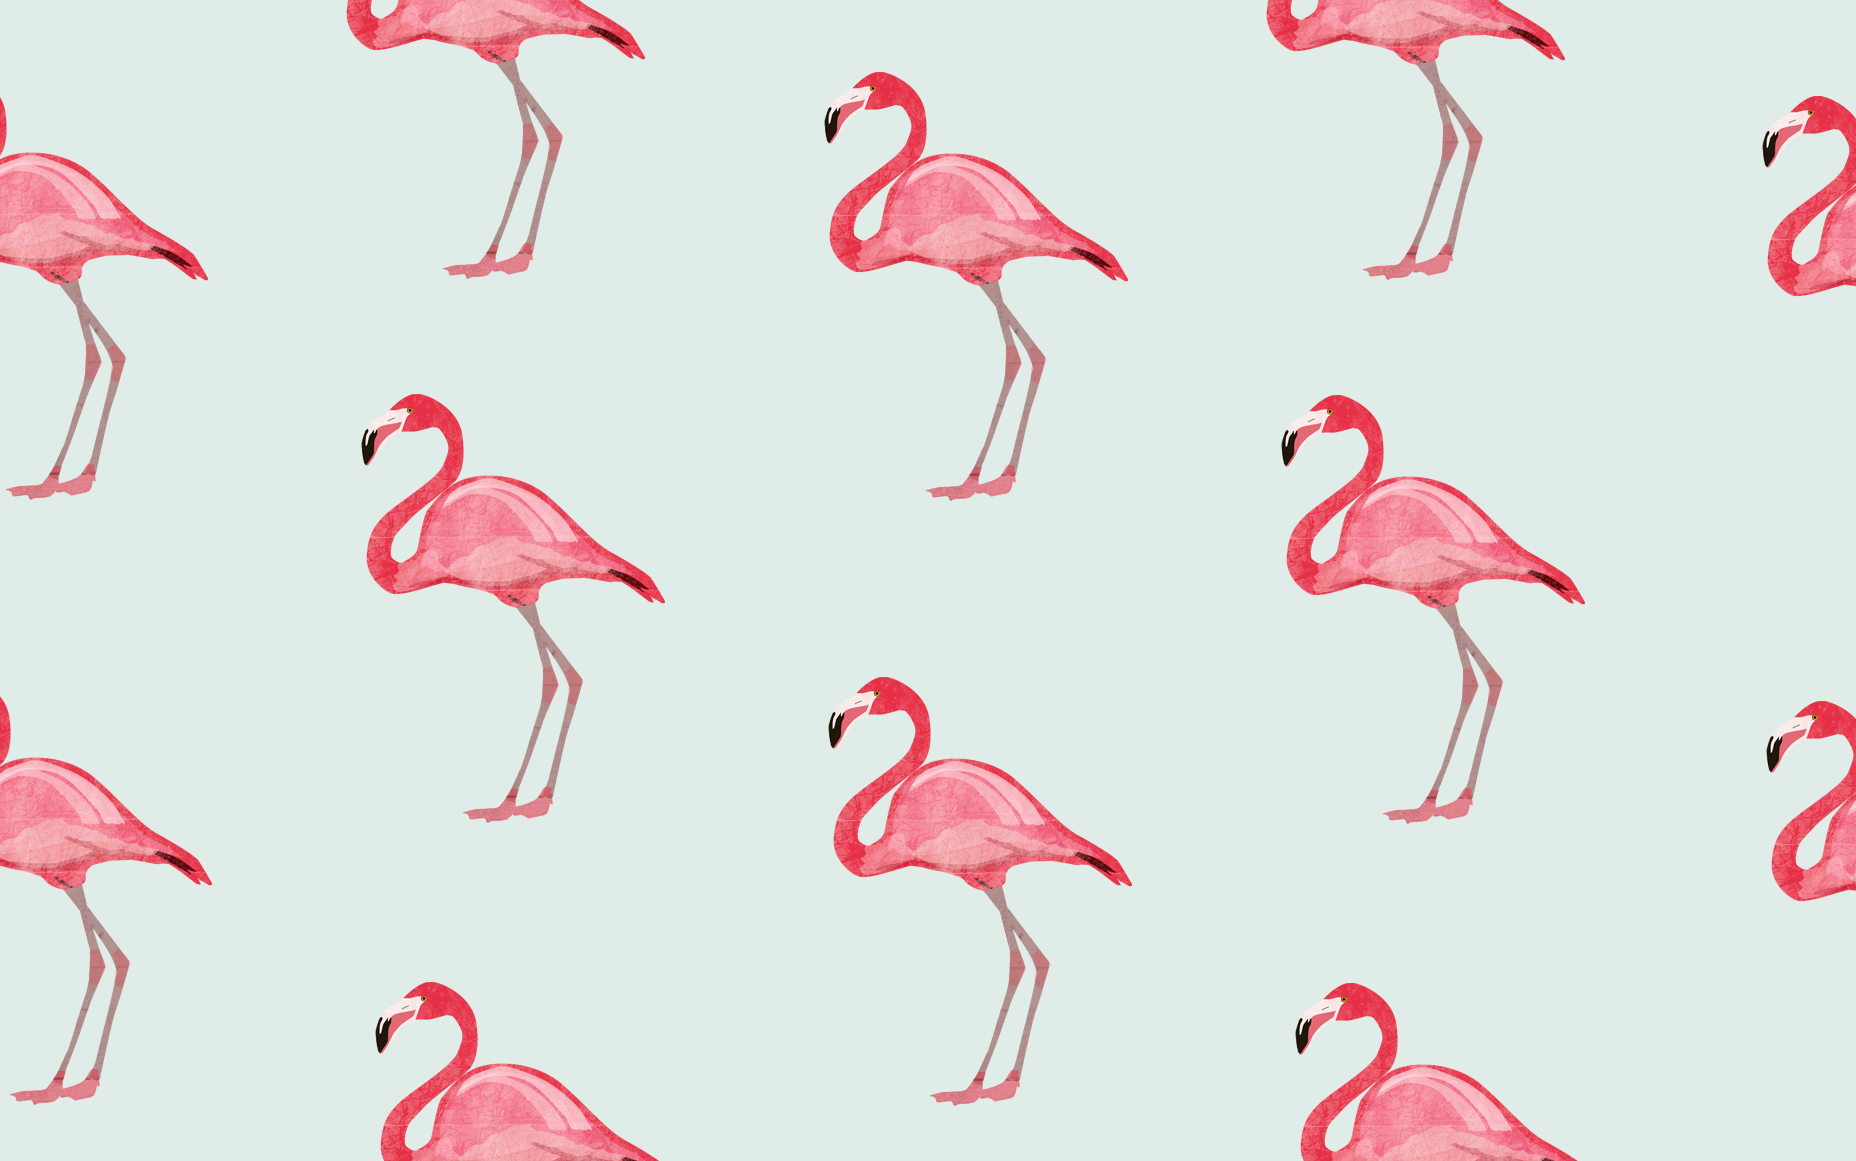 3178 Flamingo Wallpaper Stock Photos  Free  RoyaltyFree Stock Photos  from Dreamstime